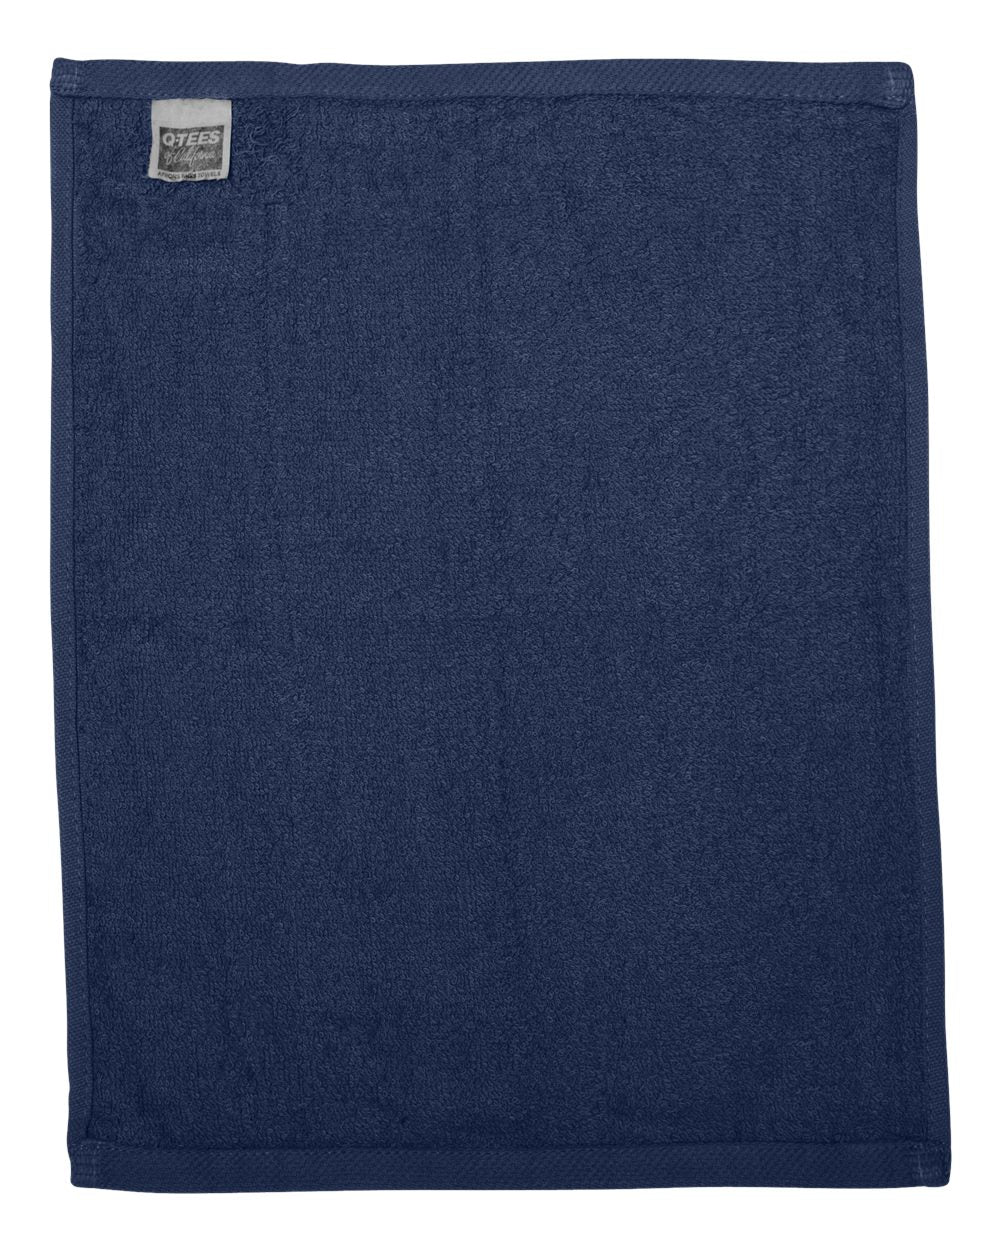 Q-Tees Hemmed Fingertip Towel T600 #color_Navy